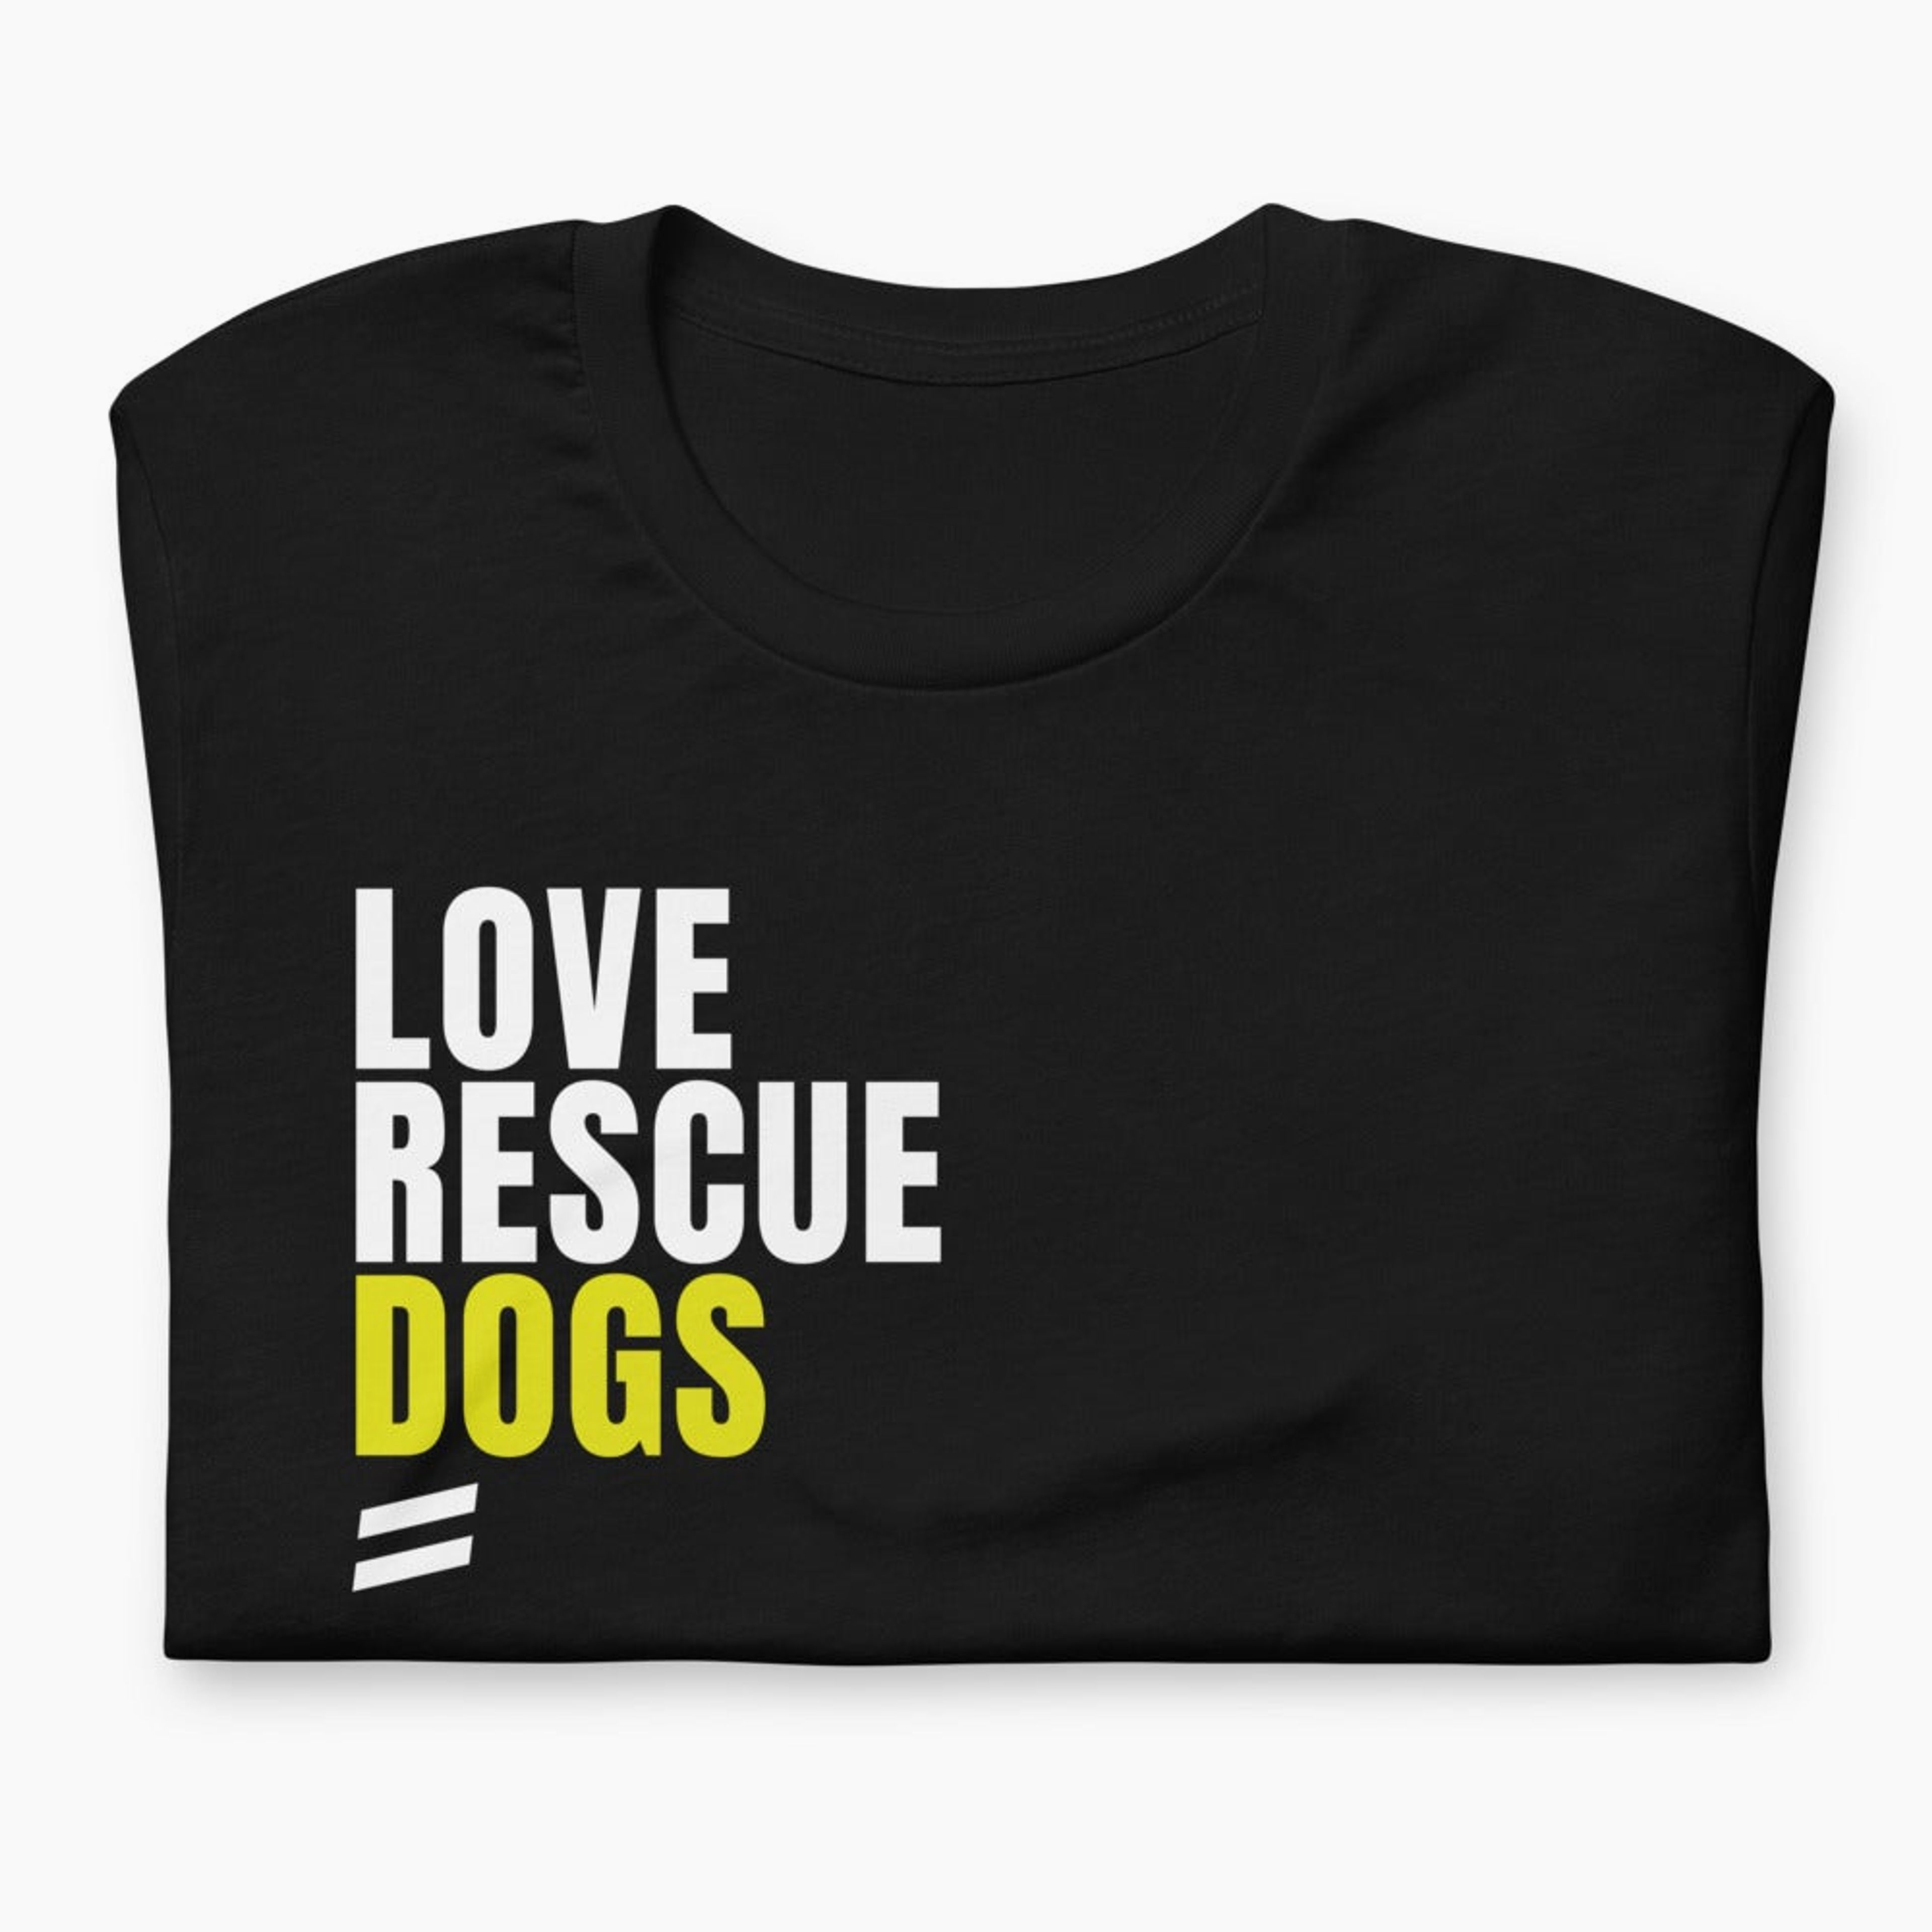 Love Rescue Dogs - Short-Sleeve Unisex T-Shirt